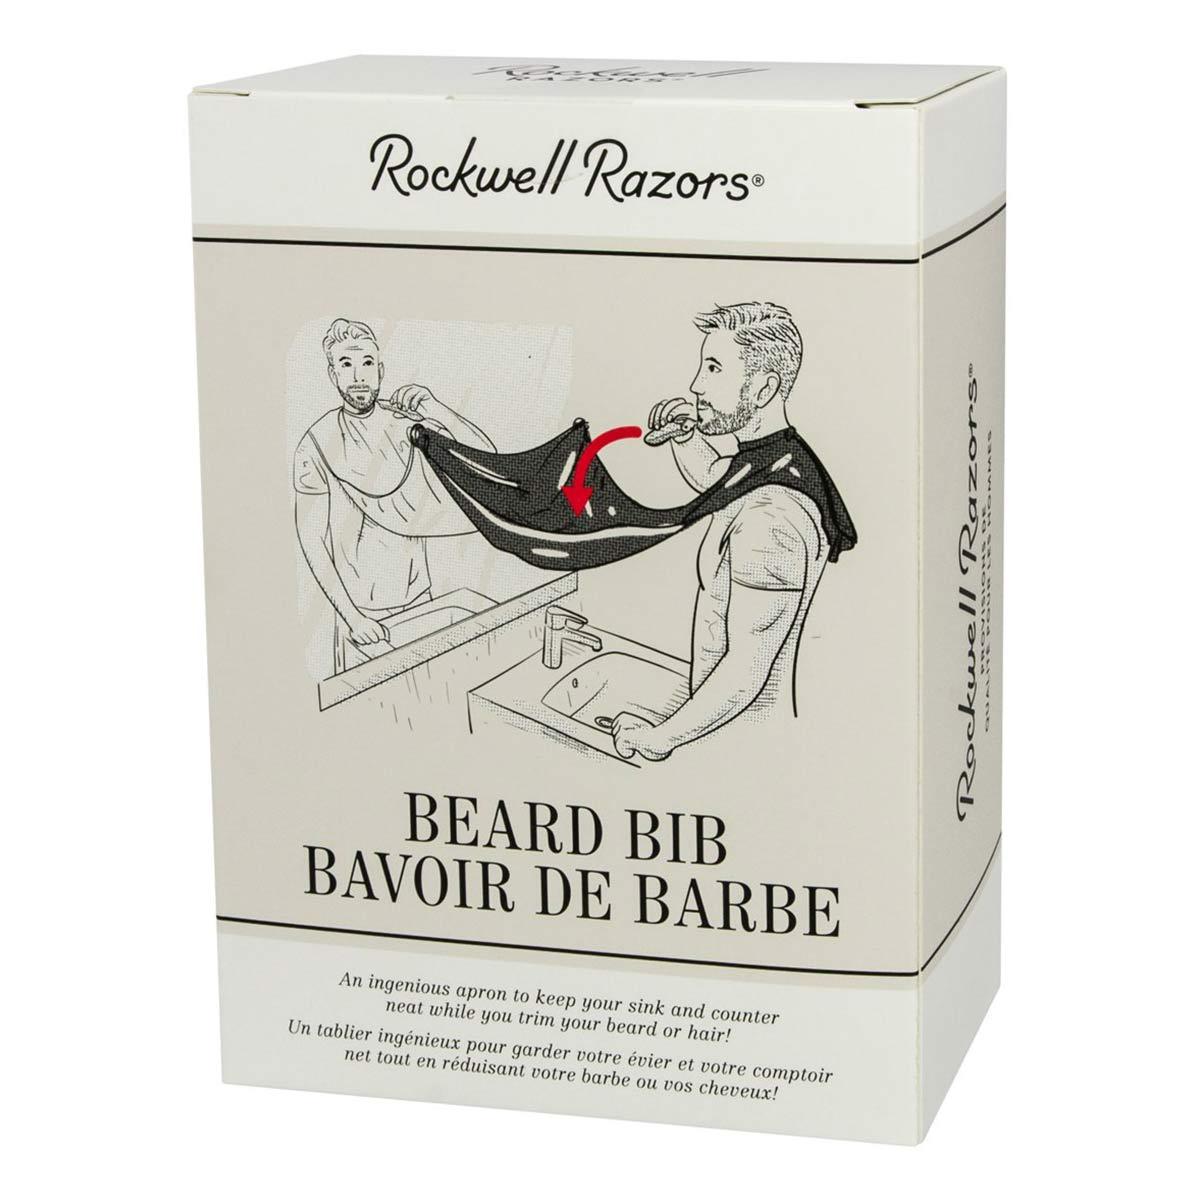 Primary image of Rockwell Beard Bib